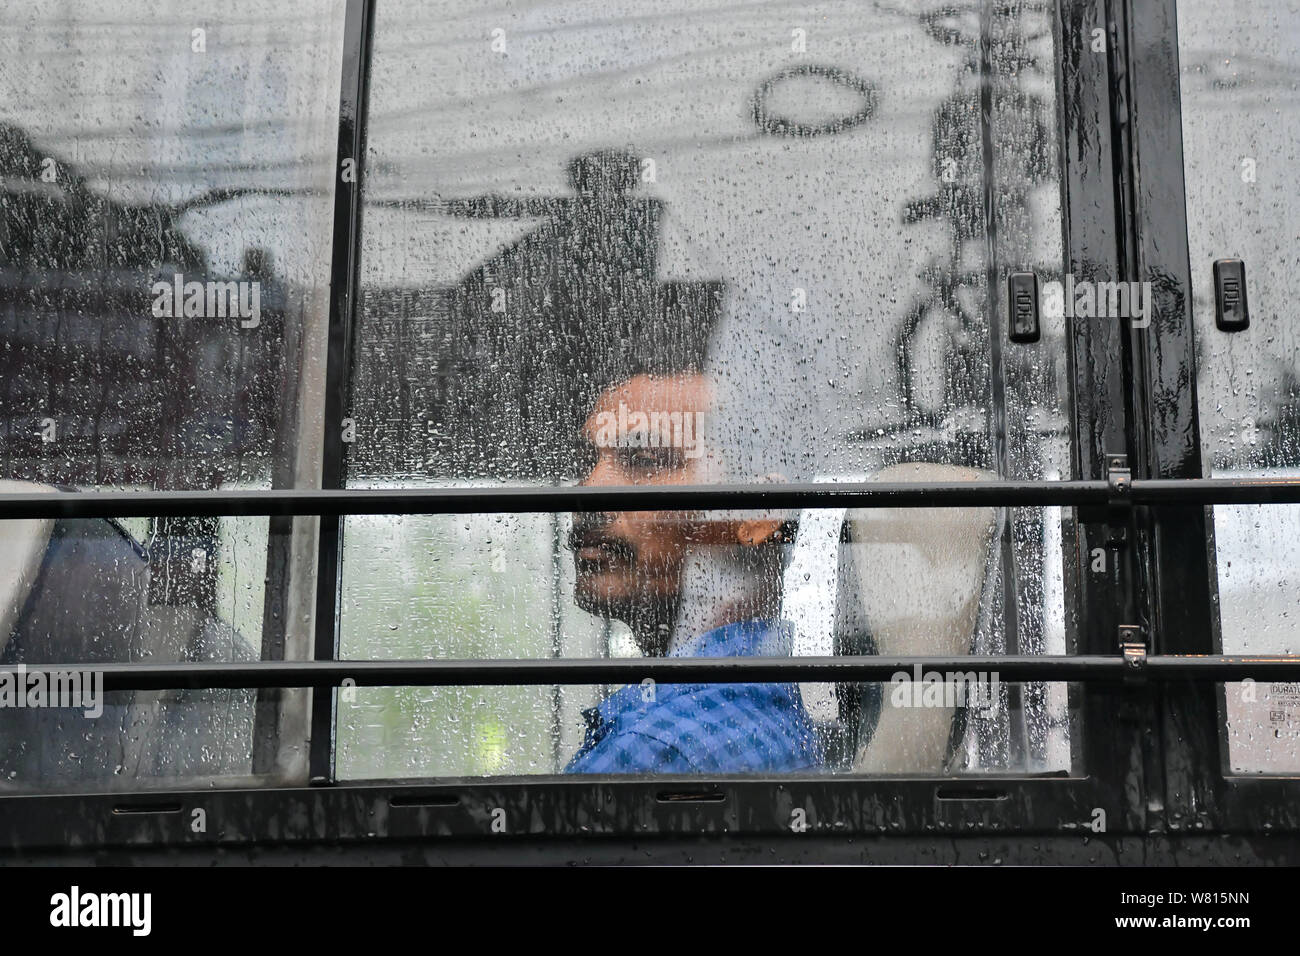 HD wallpaper: man near glass window pane, man staring out a window